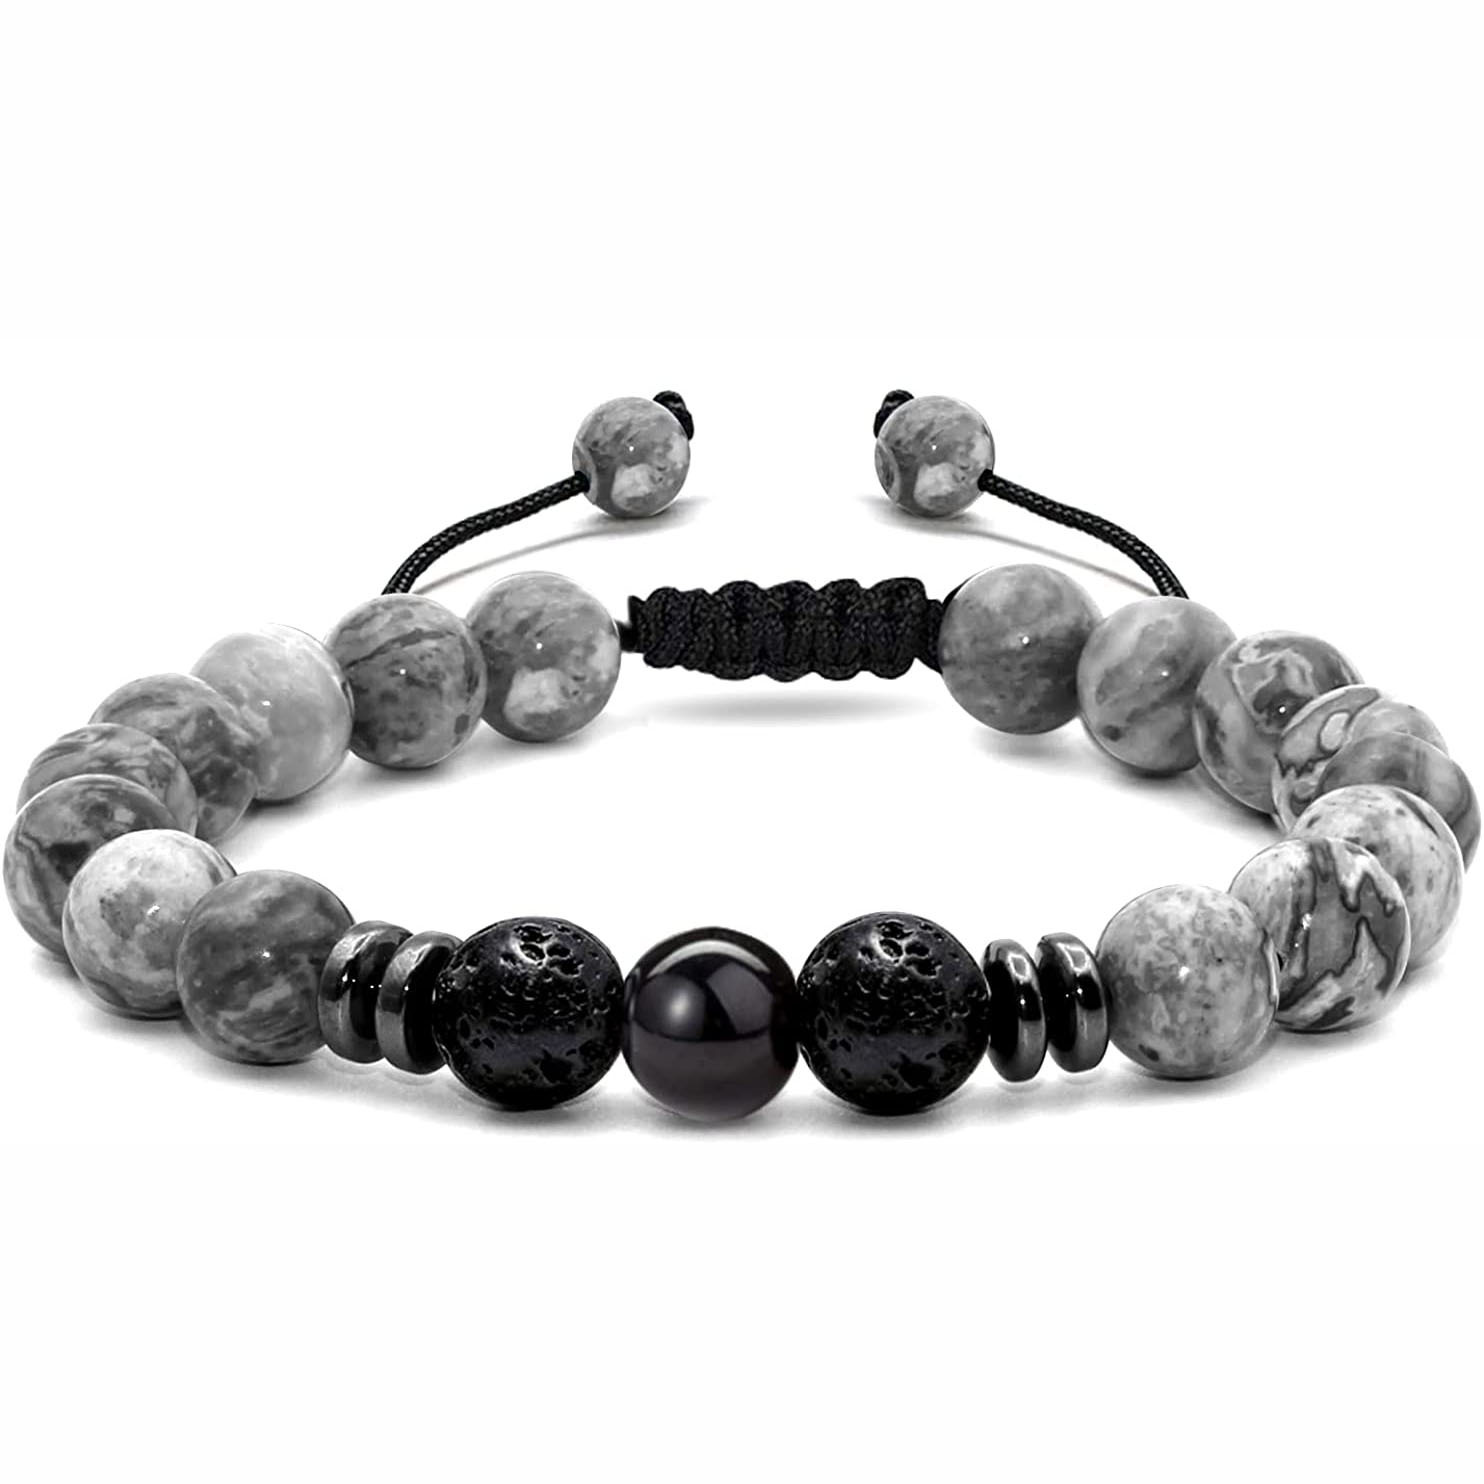 Gray stone bracelet